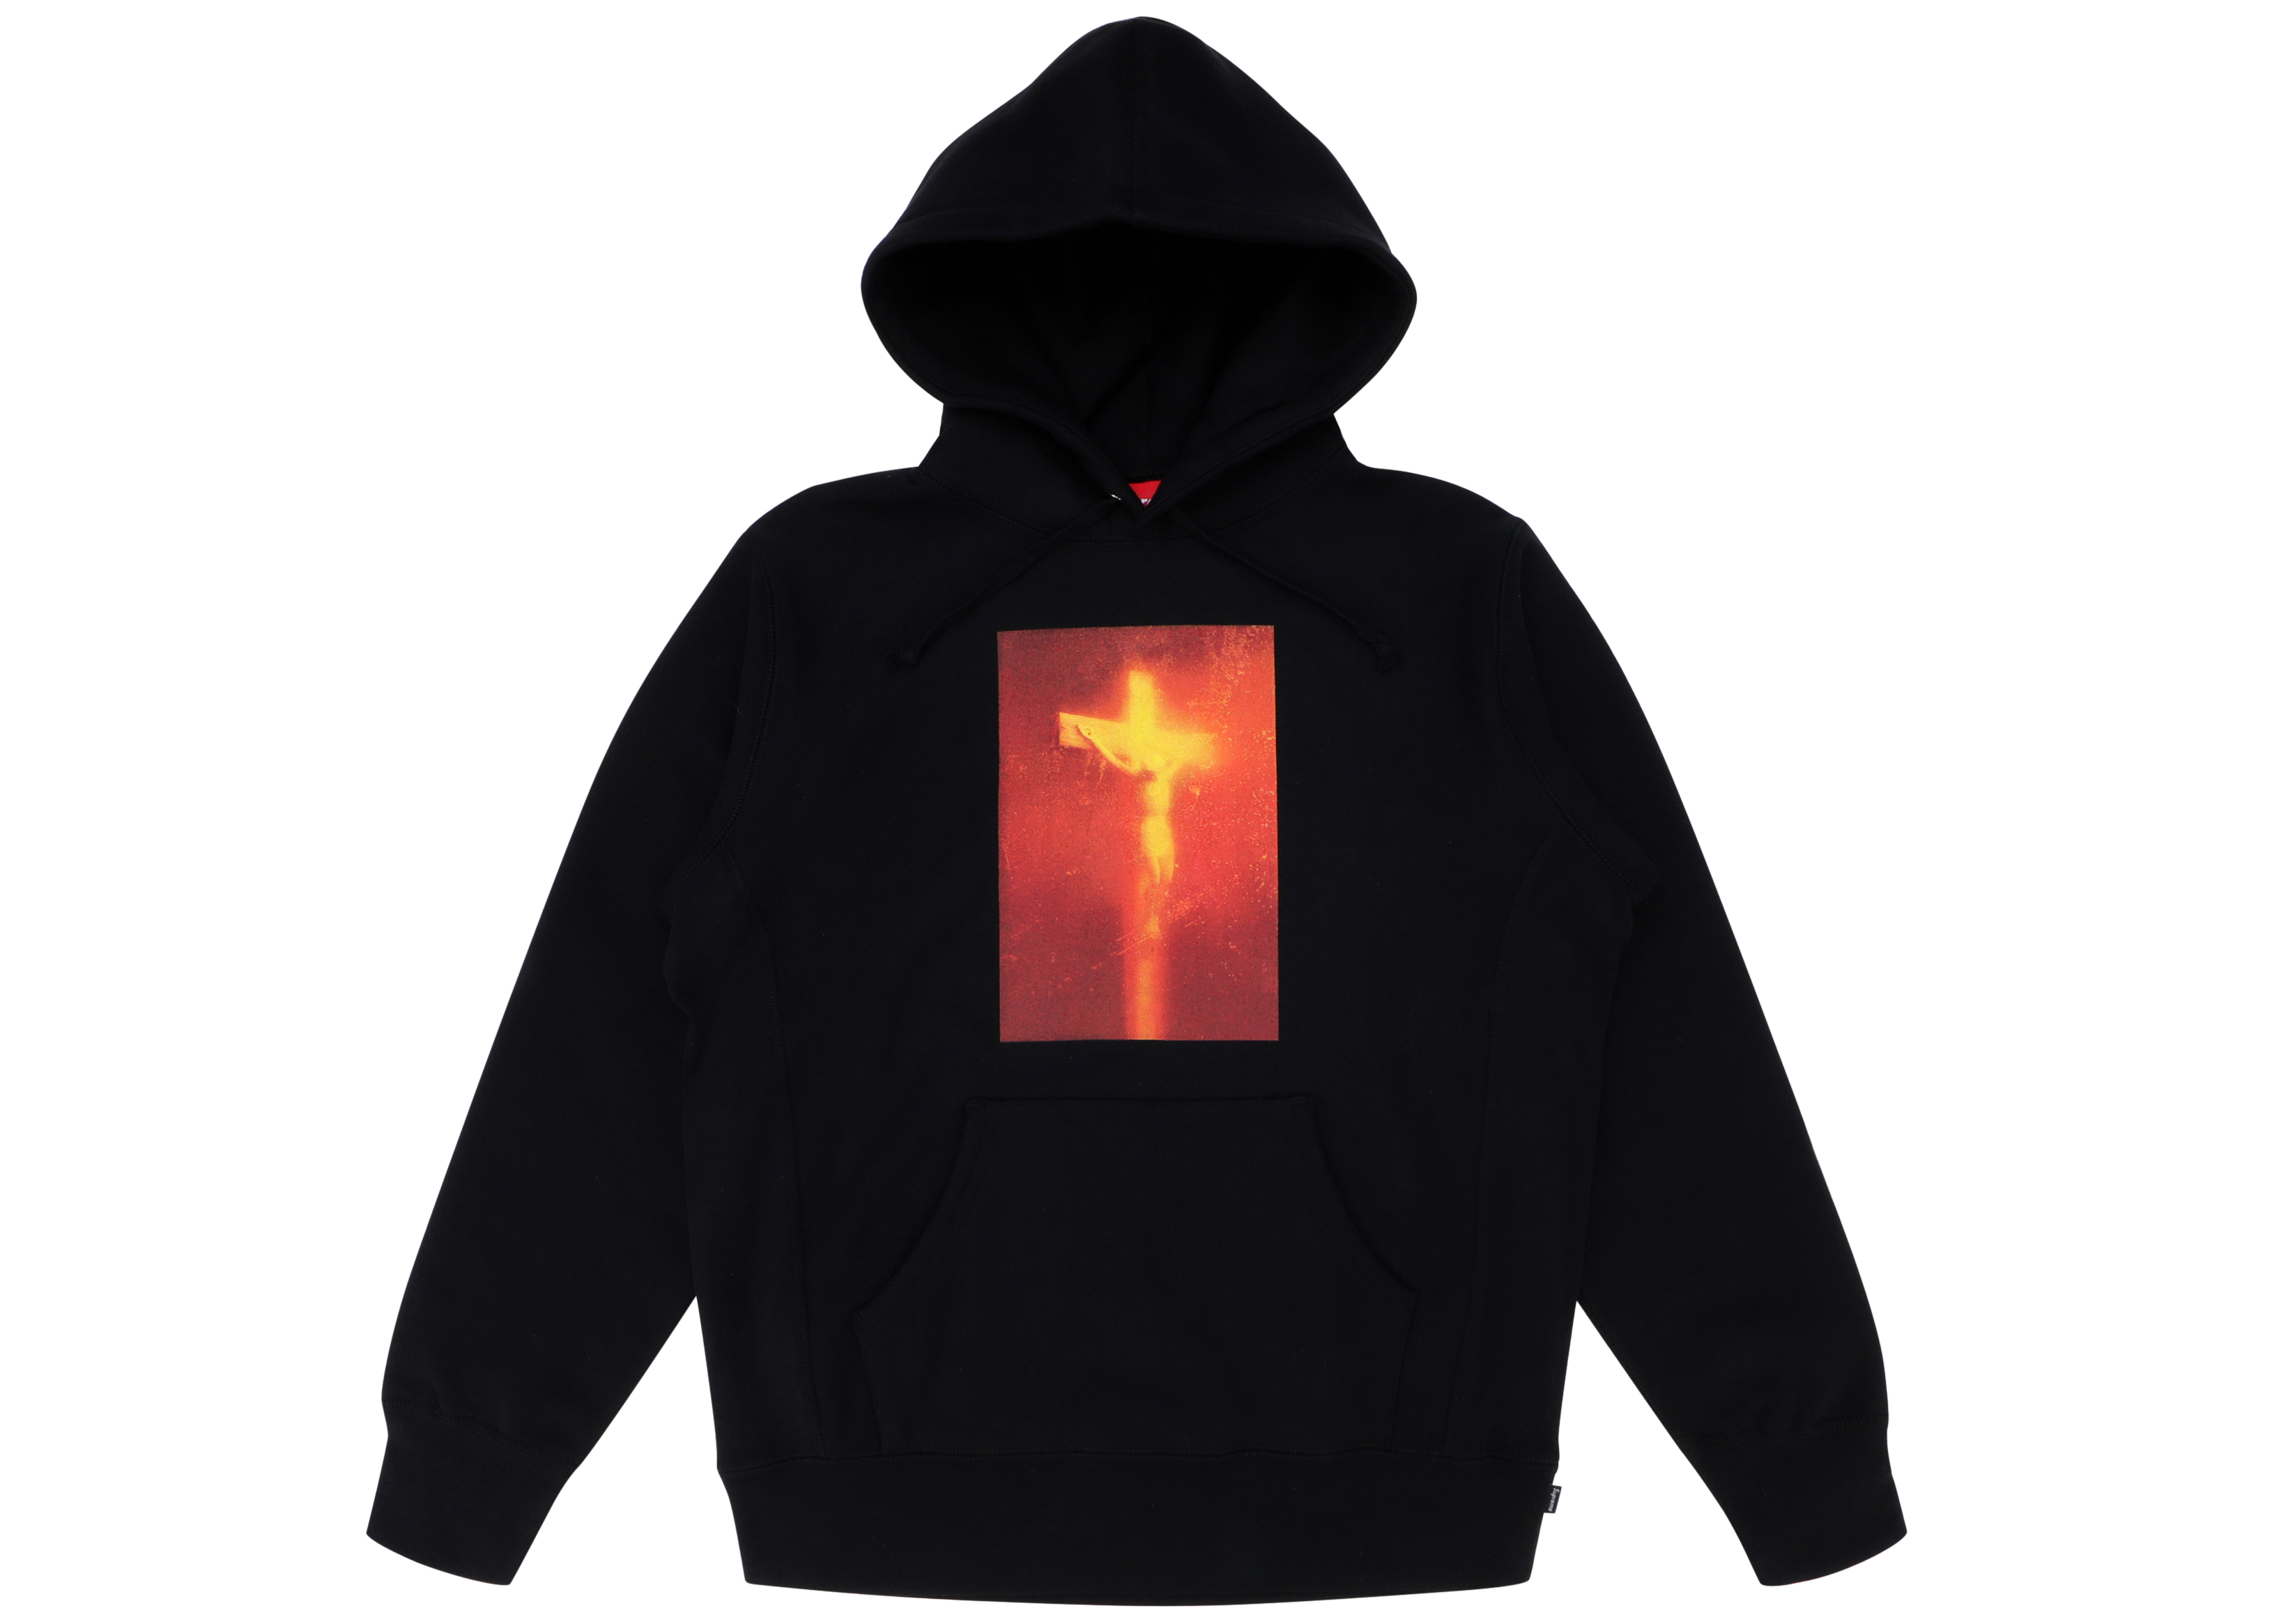 Supreme Piss Christ Hooded Sweatshirt Black